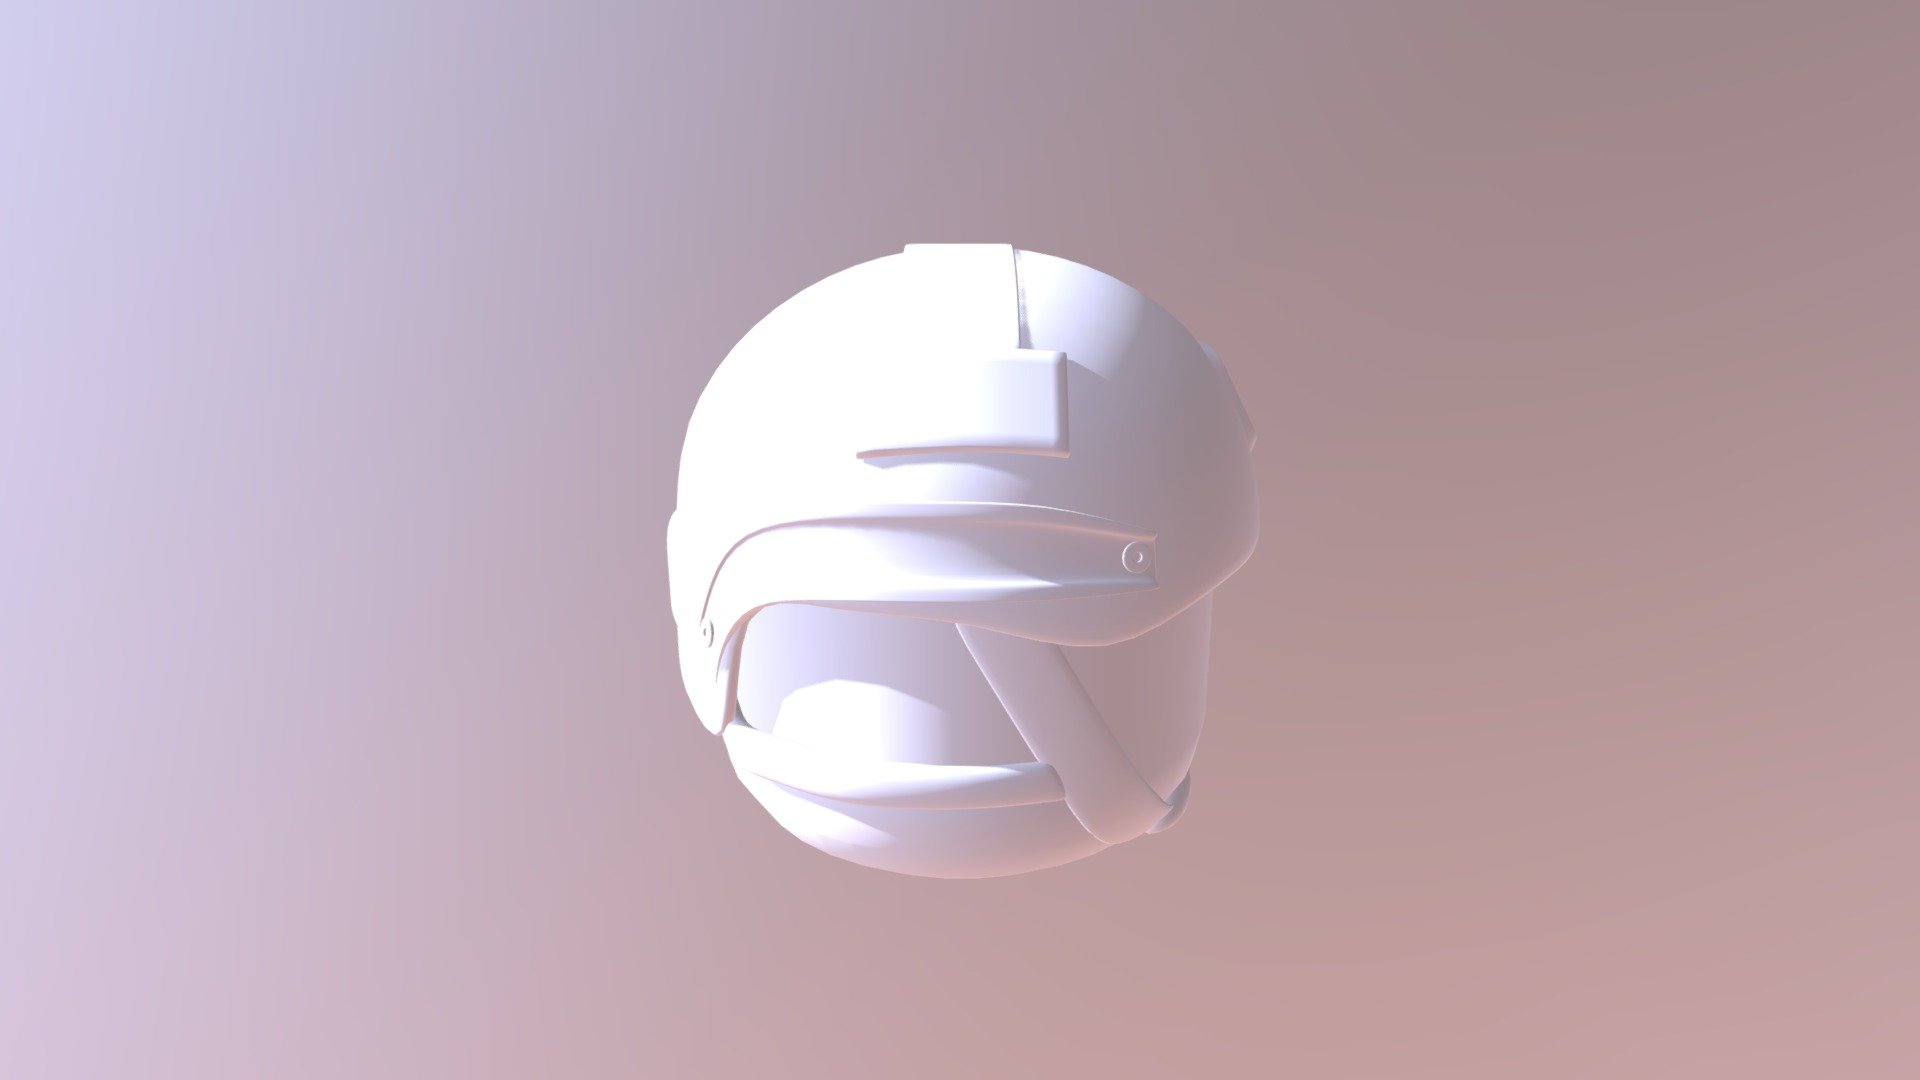 Roblox Fast Helmet 3d Model By Militia 405 Militia 405 7d867e7 - the cardboard helmet in roblox